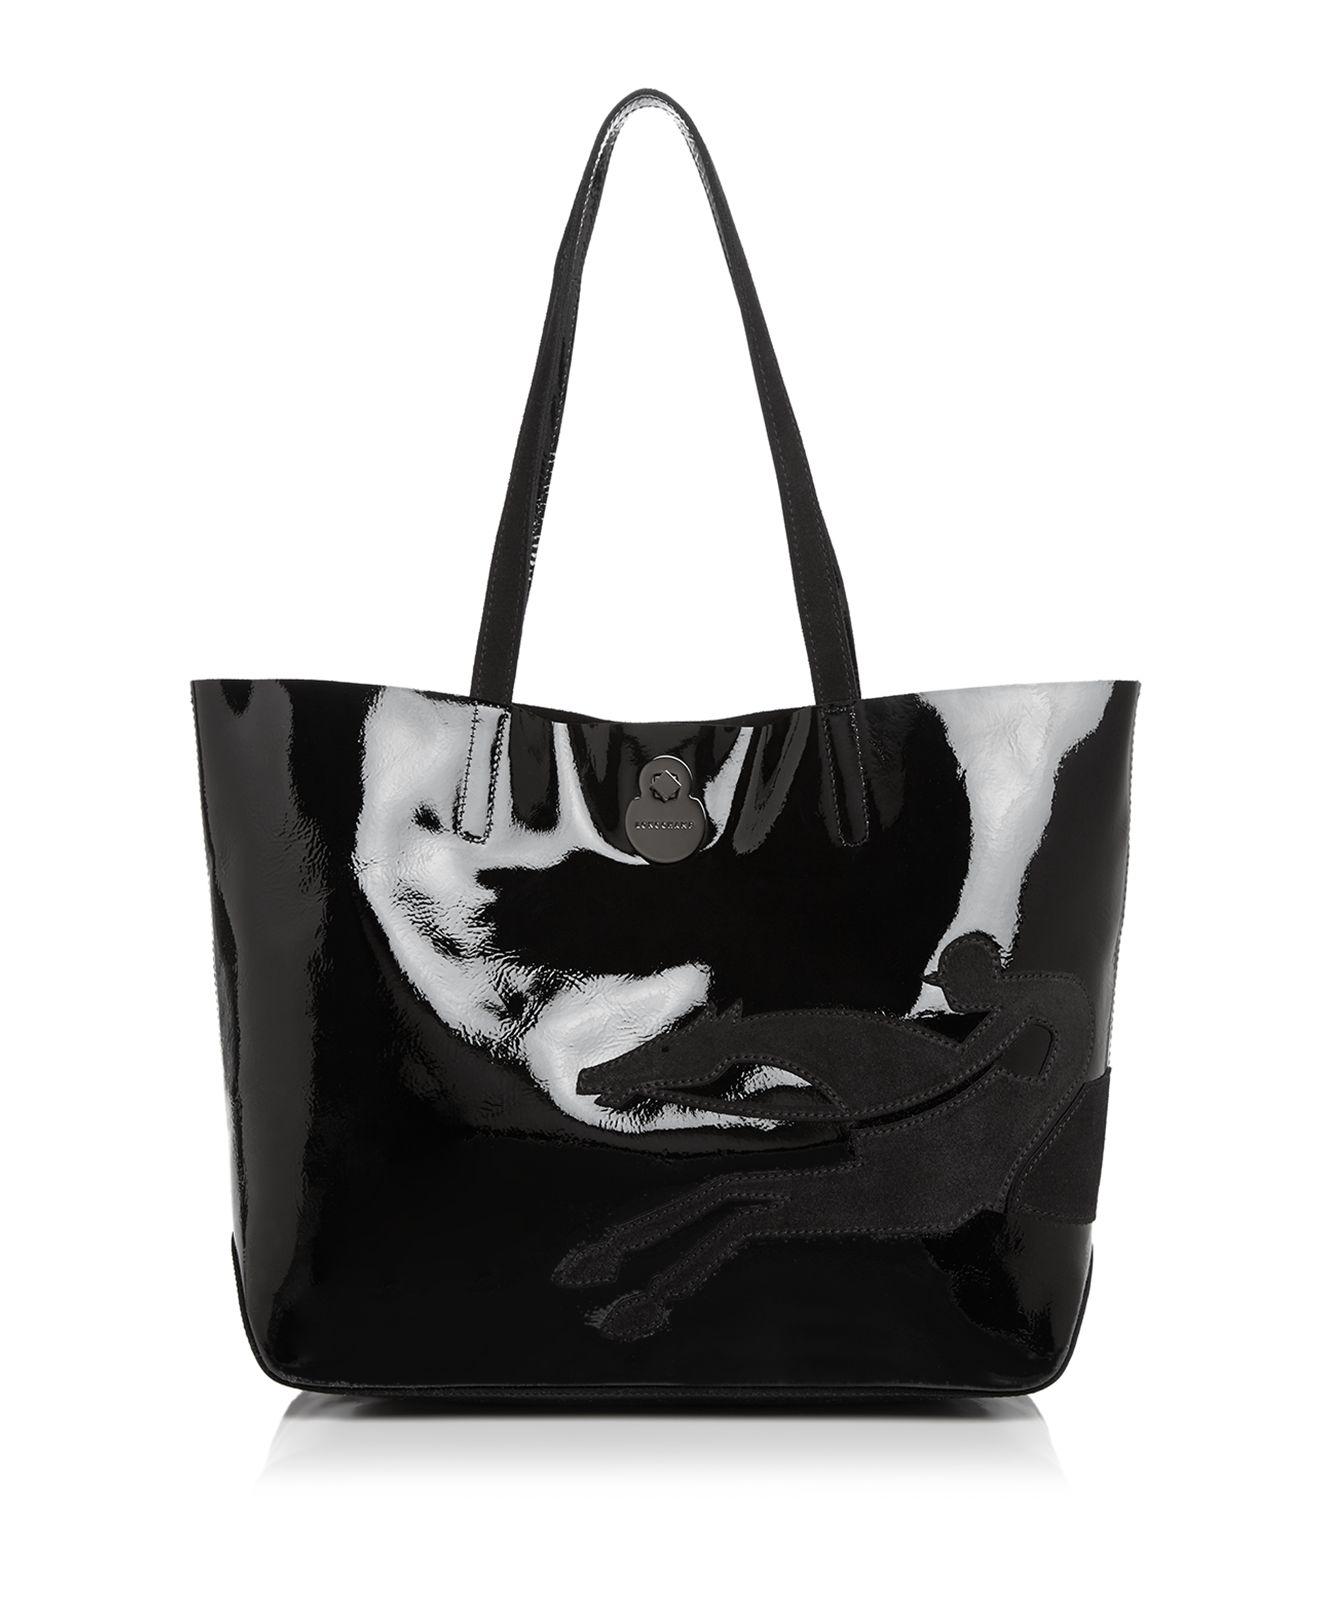 Longchamp Shop-it Medium Patent Leather Tote Bag in Black - Lyst